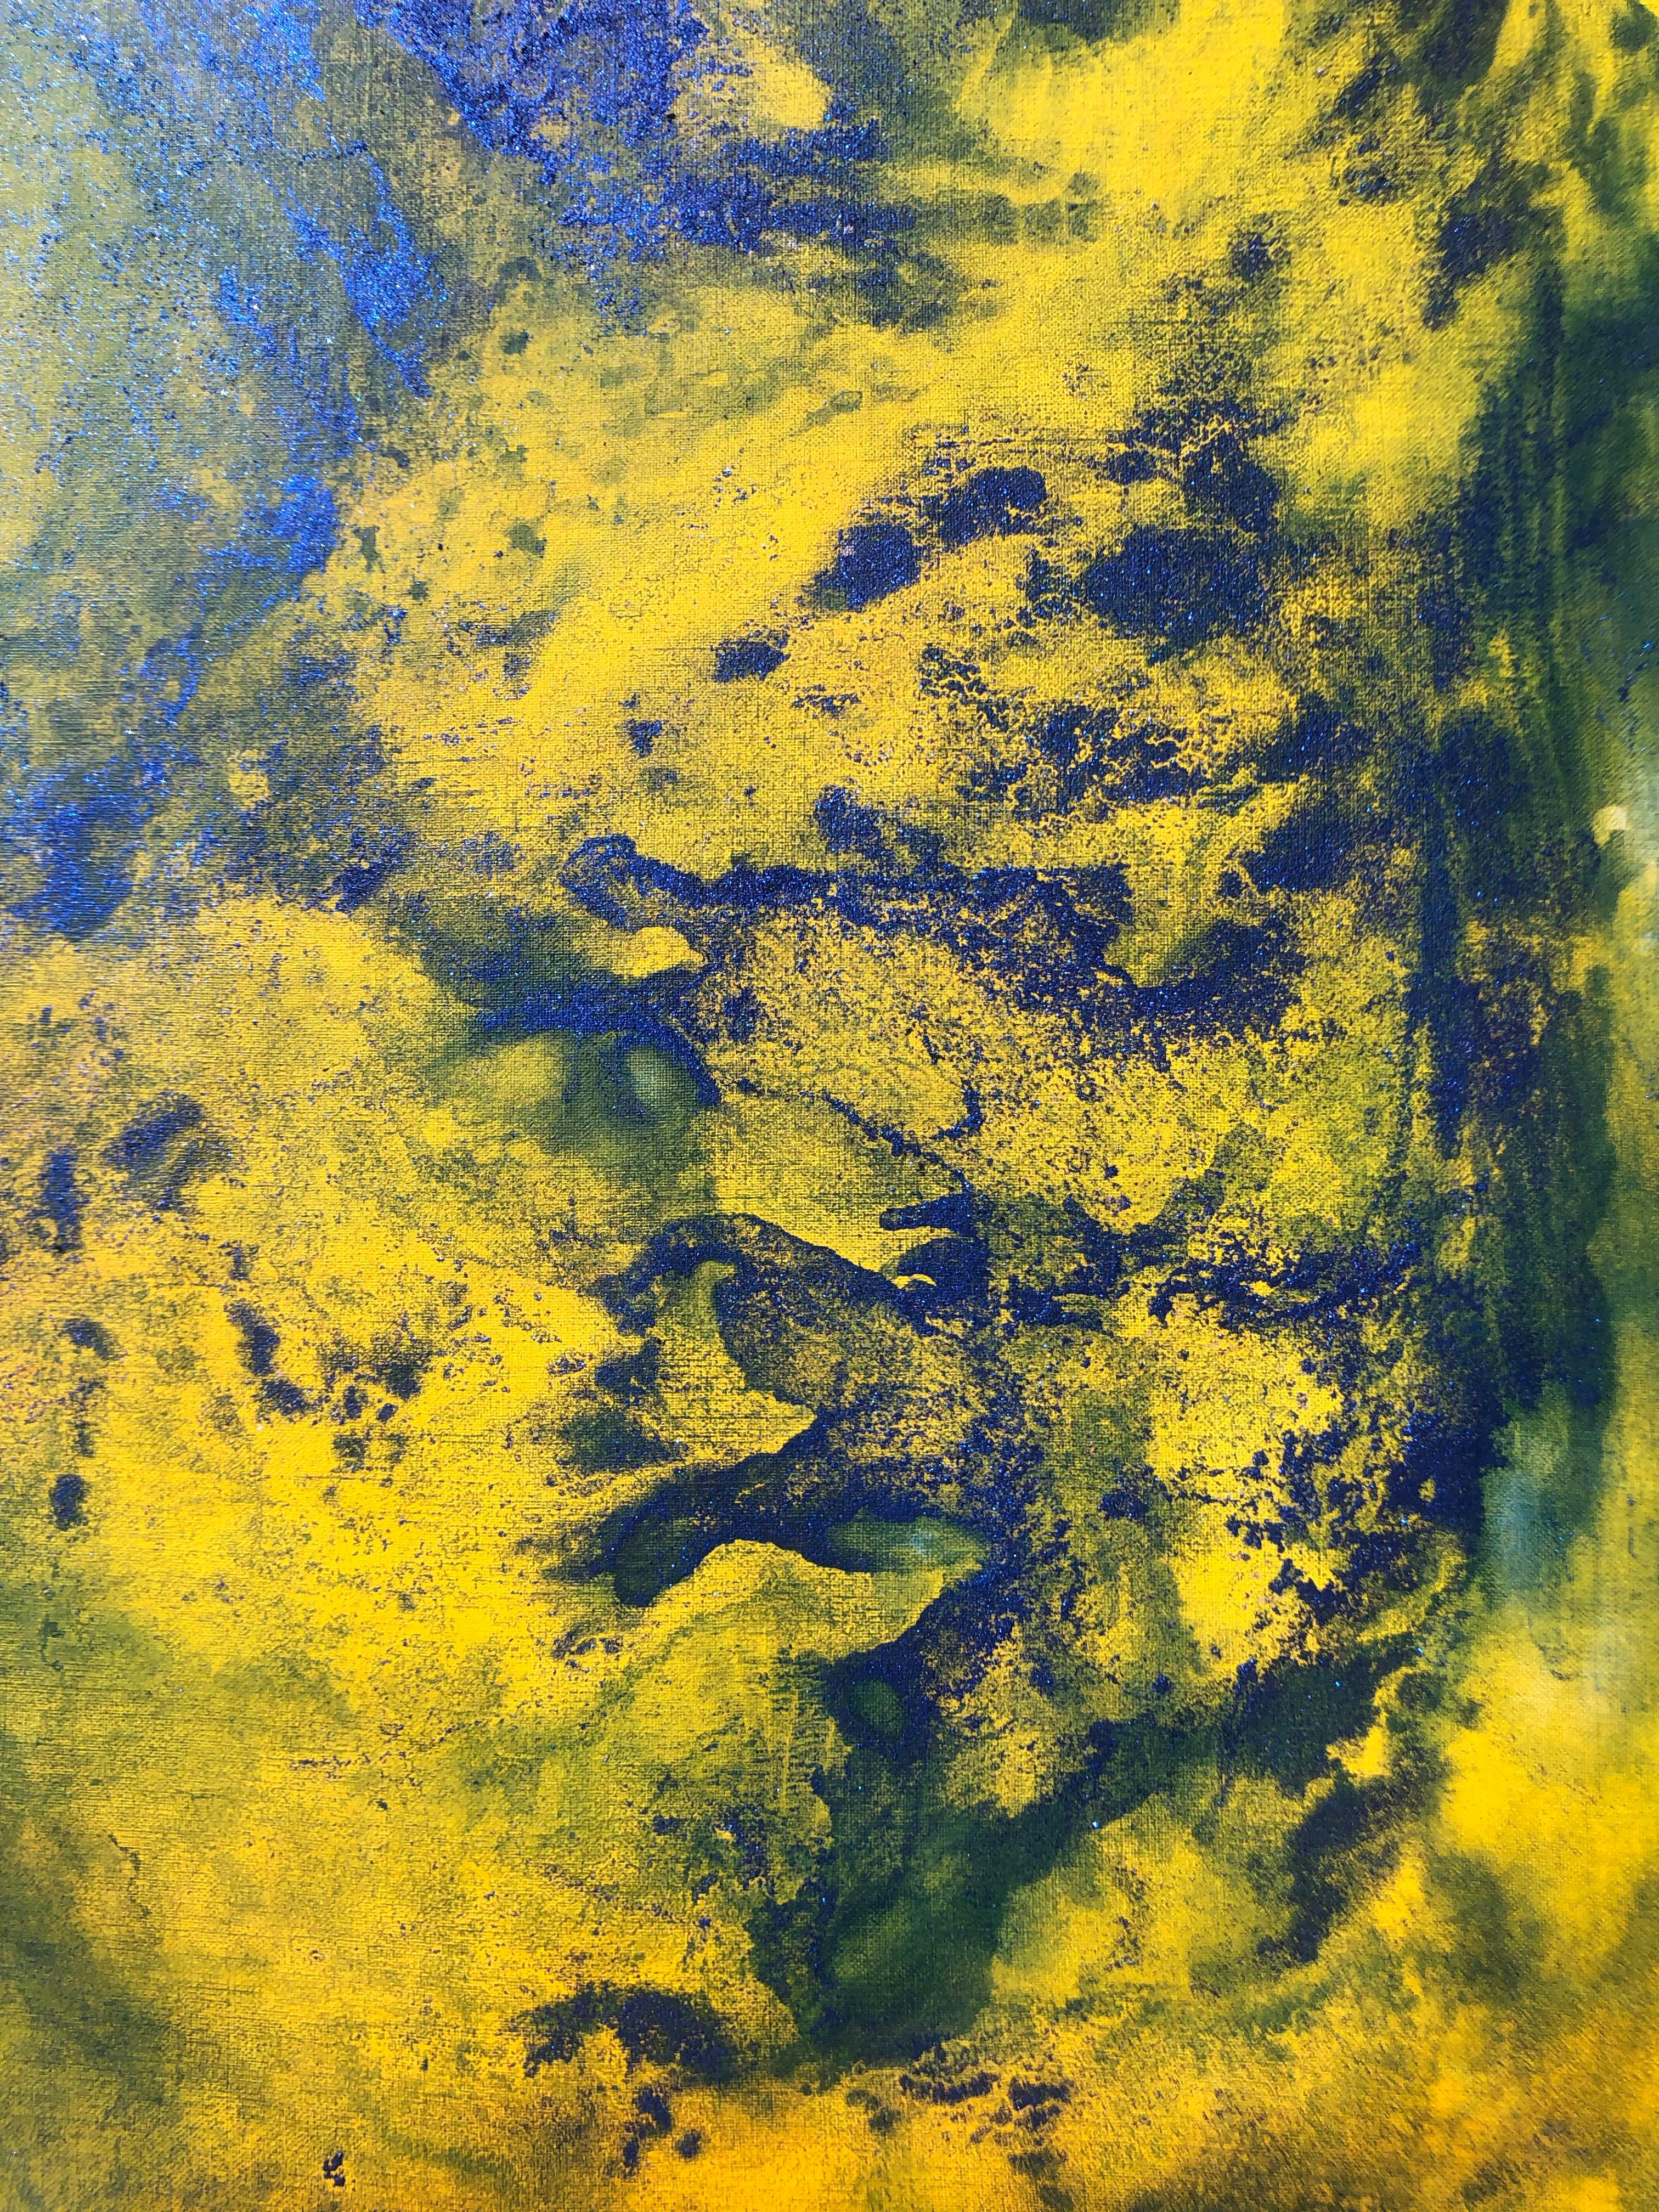 Contemporary art - 21st century painting on linen canvas - Blue, yellow, waves – Painting von Volodymyr Zayichenko